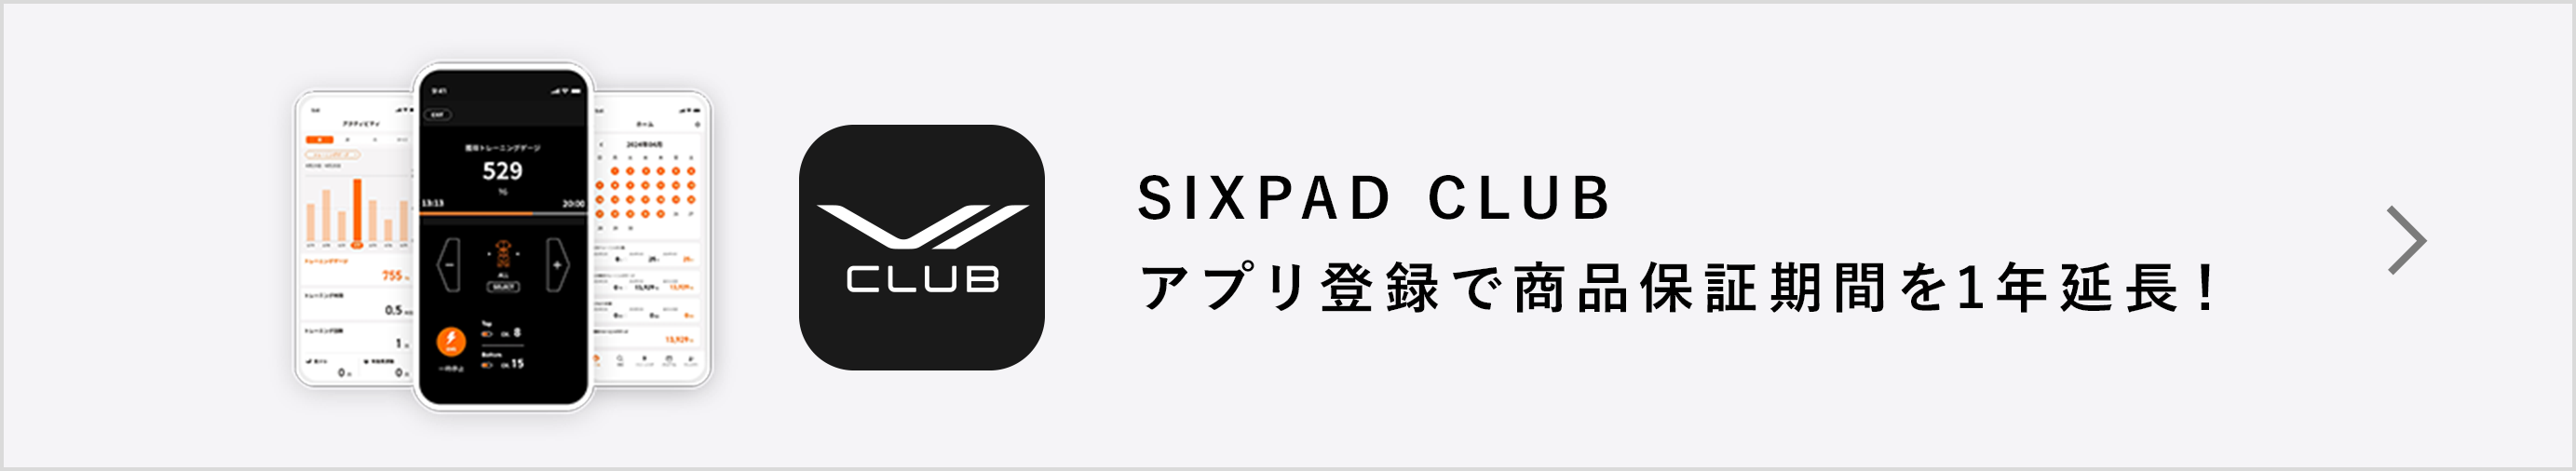 SIXPAD CLUBアプリ登録で商品保証期間を1年延長